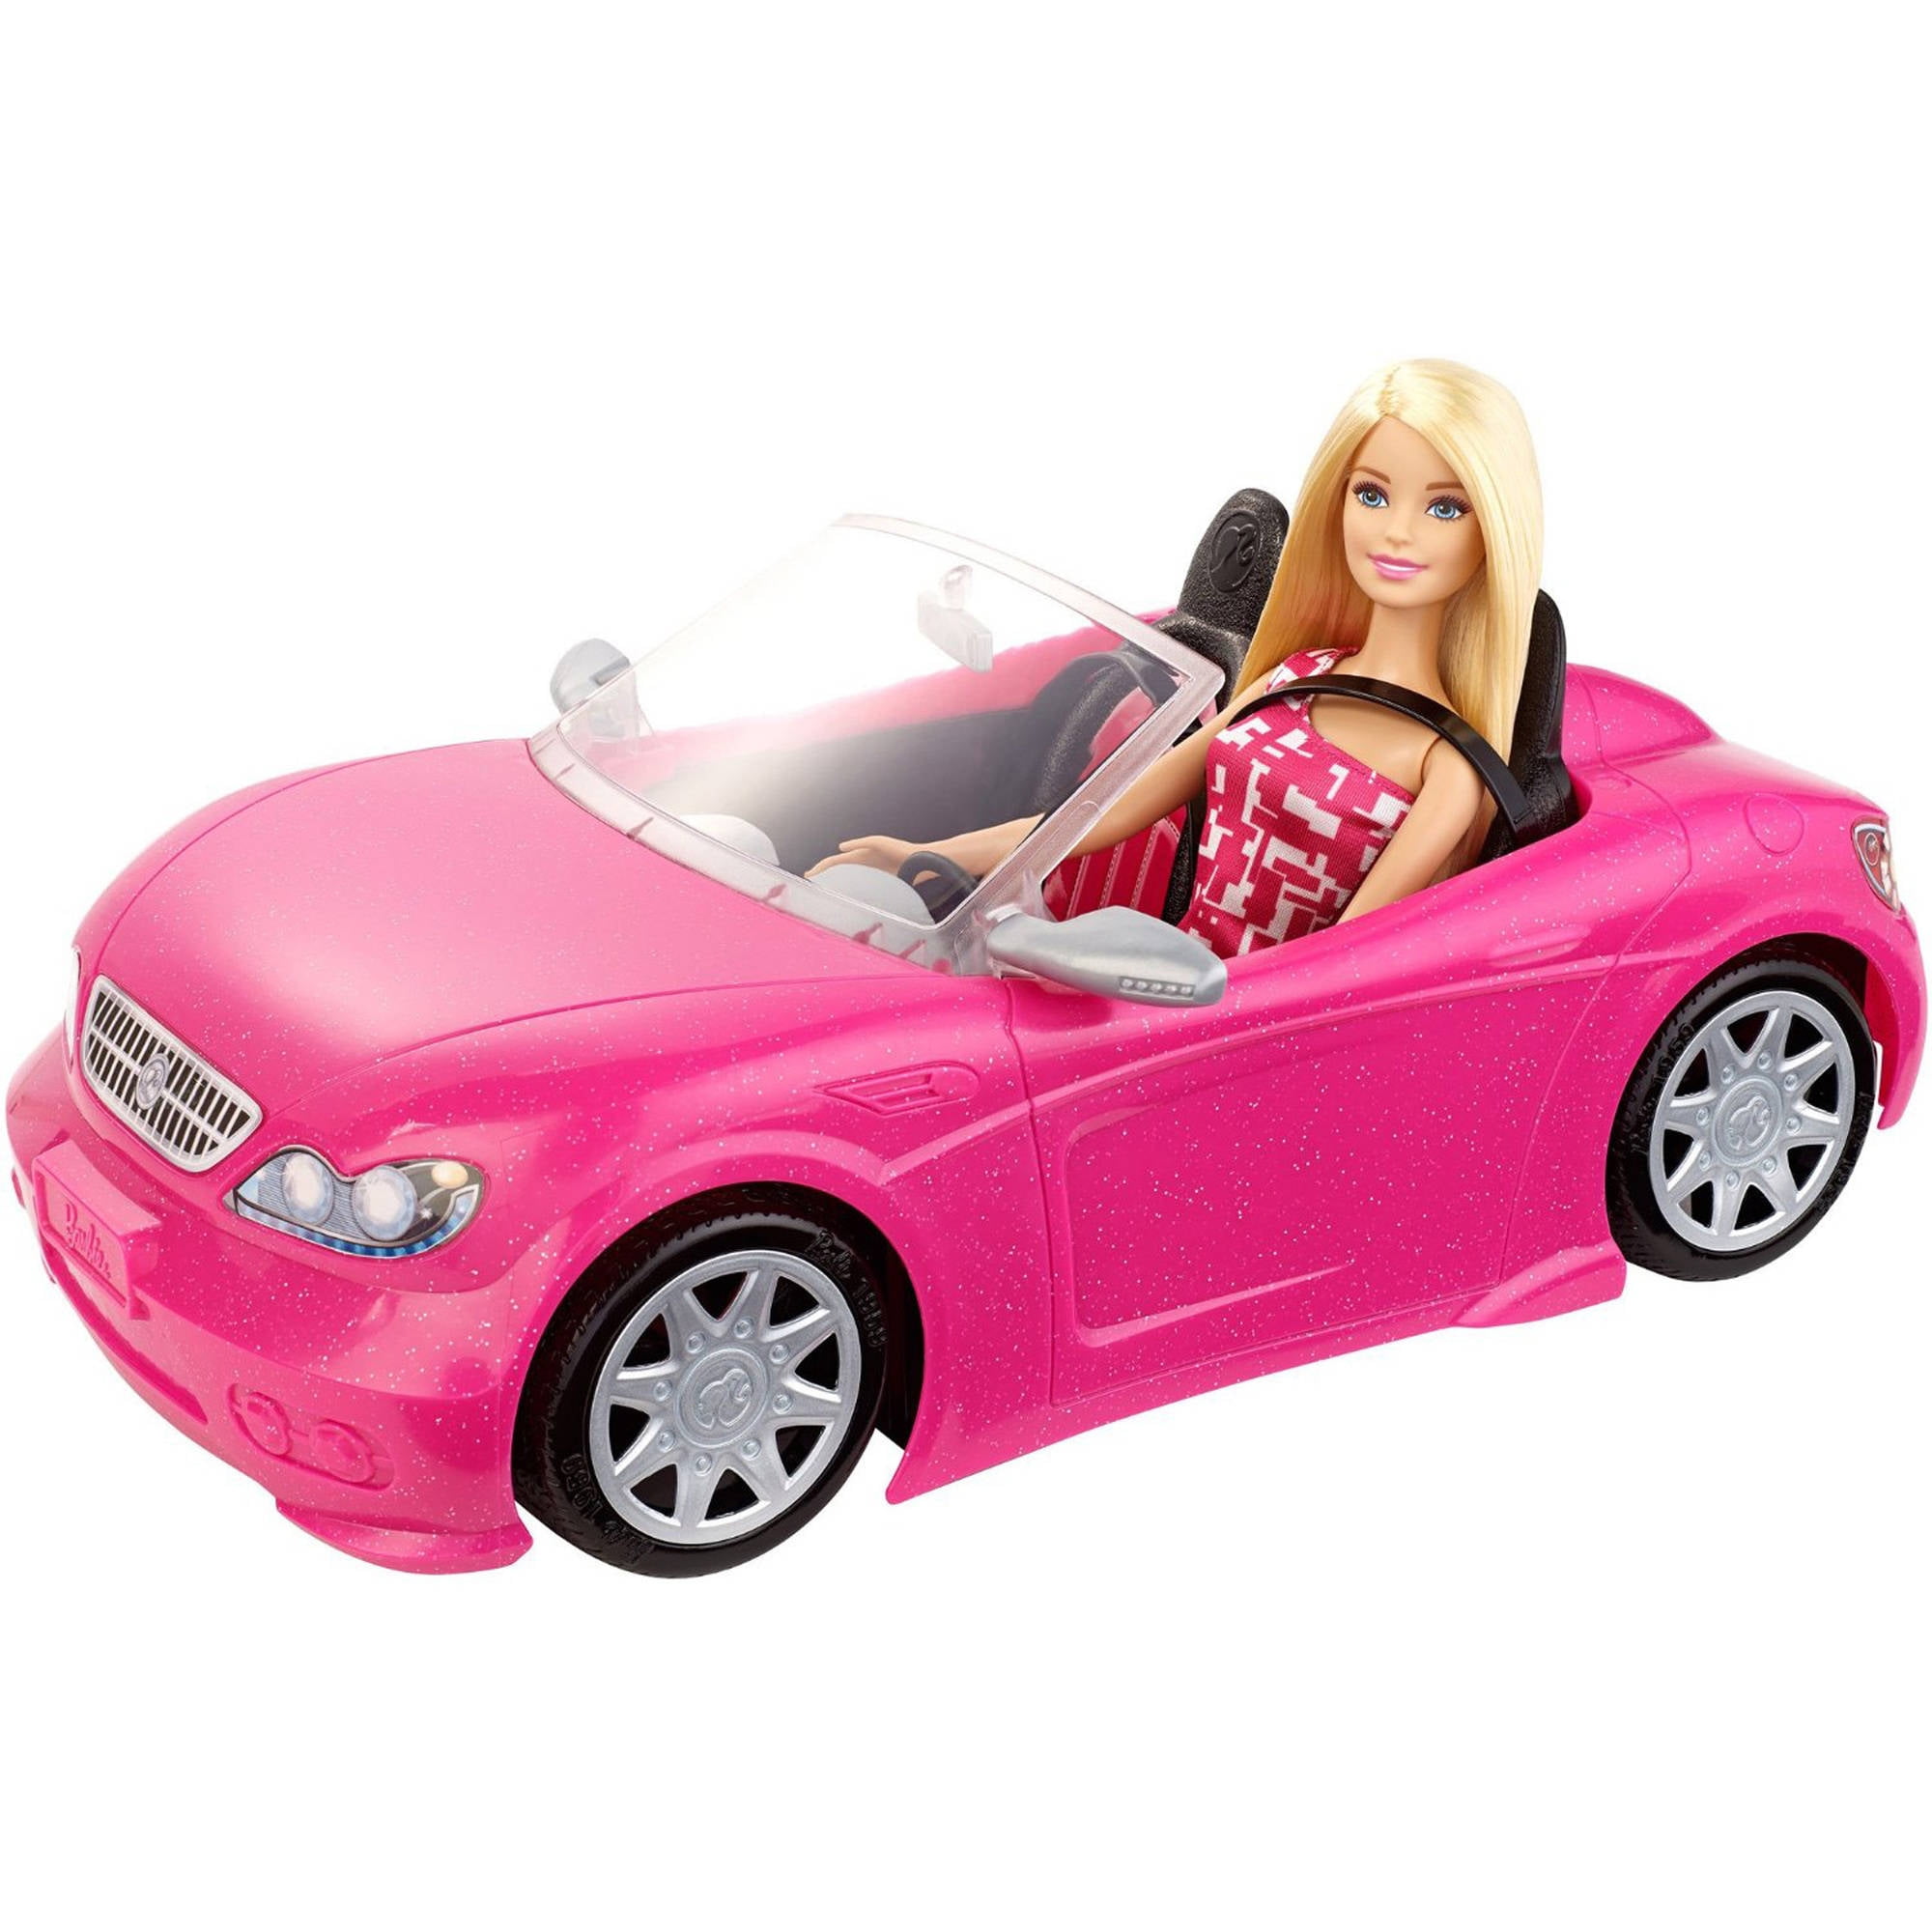 Barbie Dolls and Convertible Pink Car FPR57 Mattel for sale online 